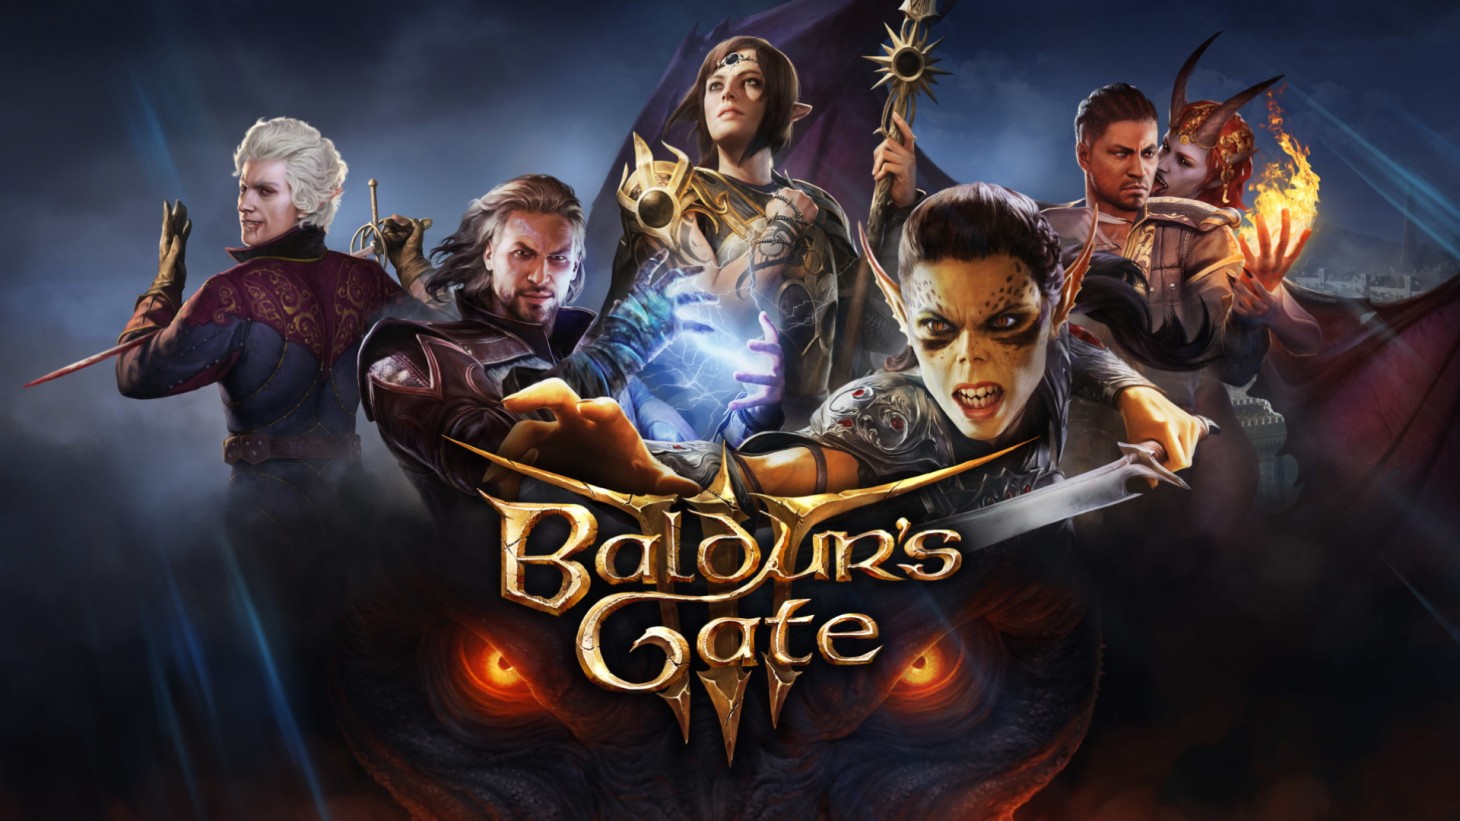  Early Access to Baldurs Gate